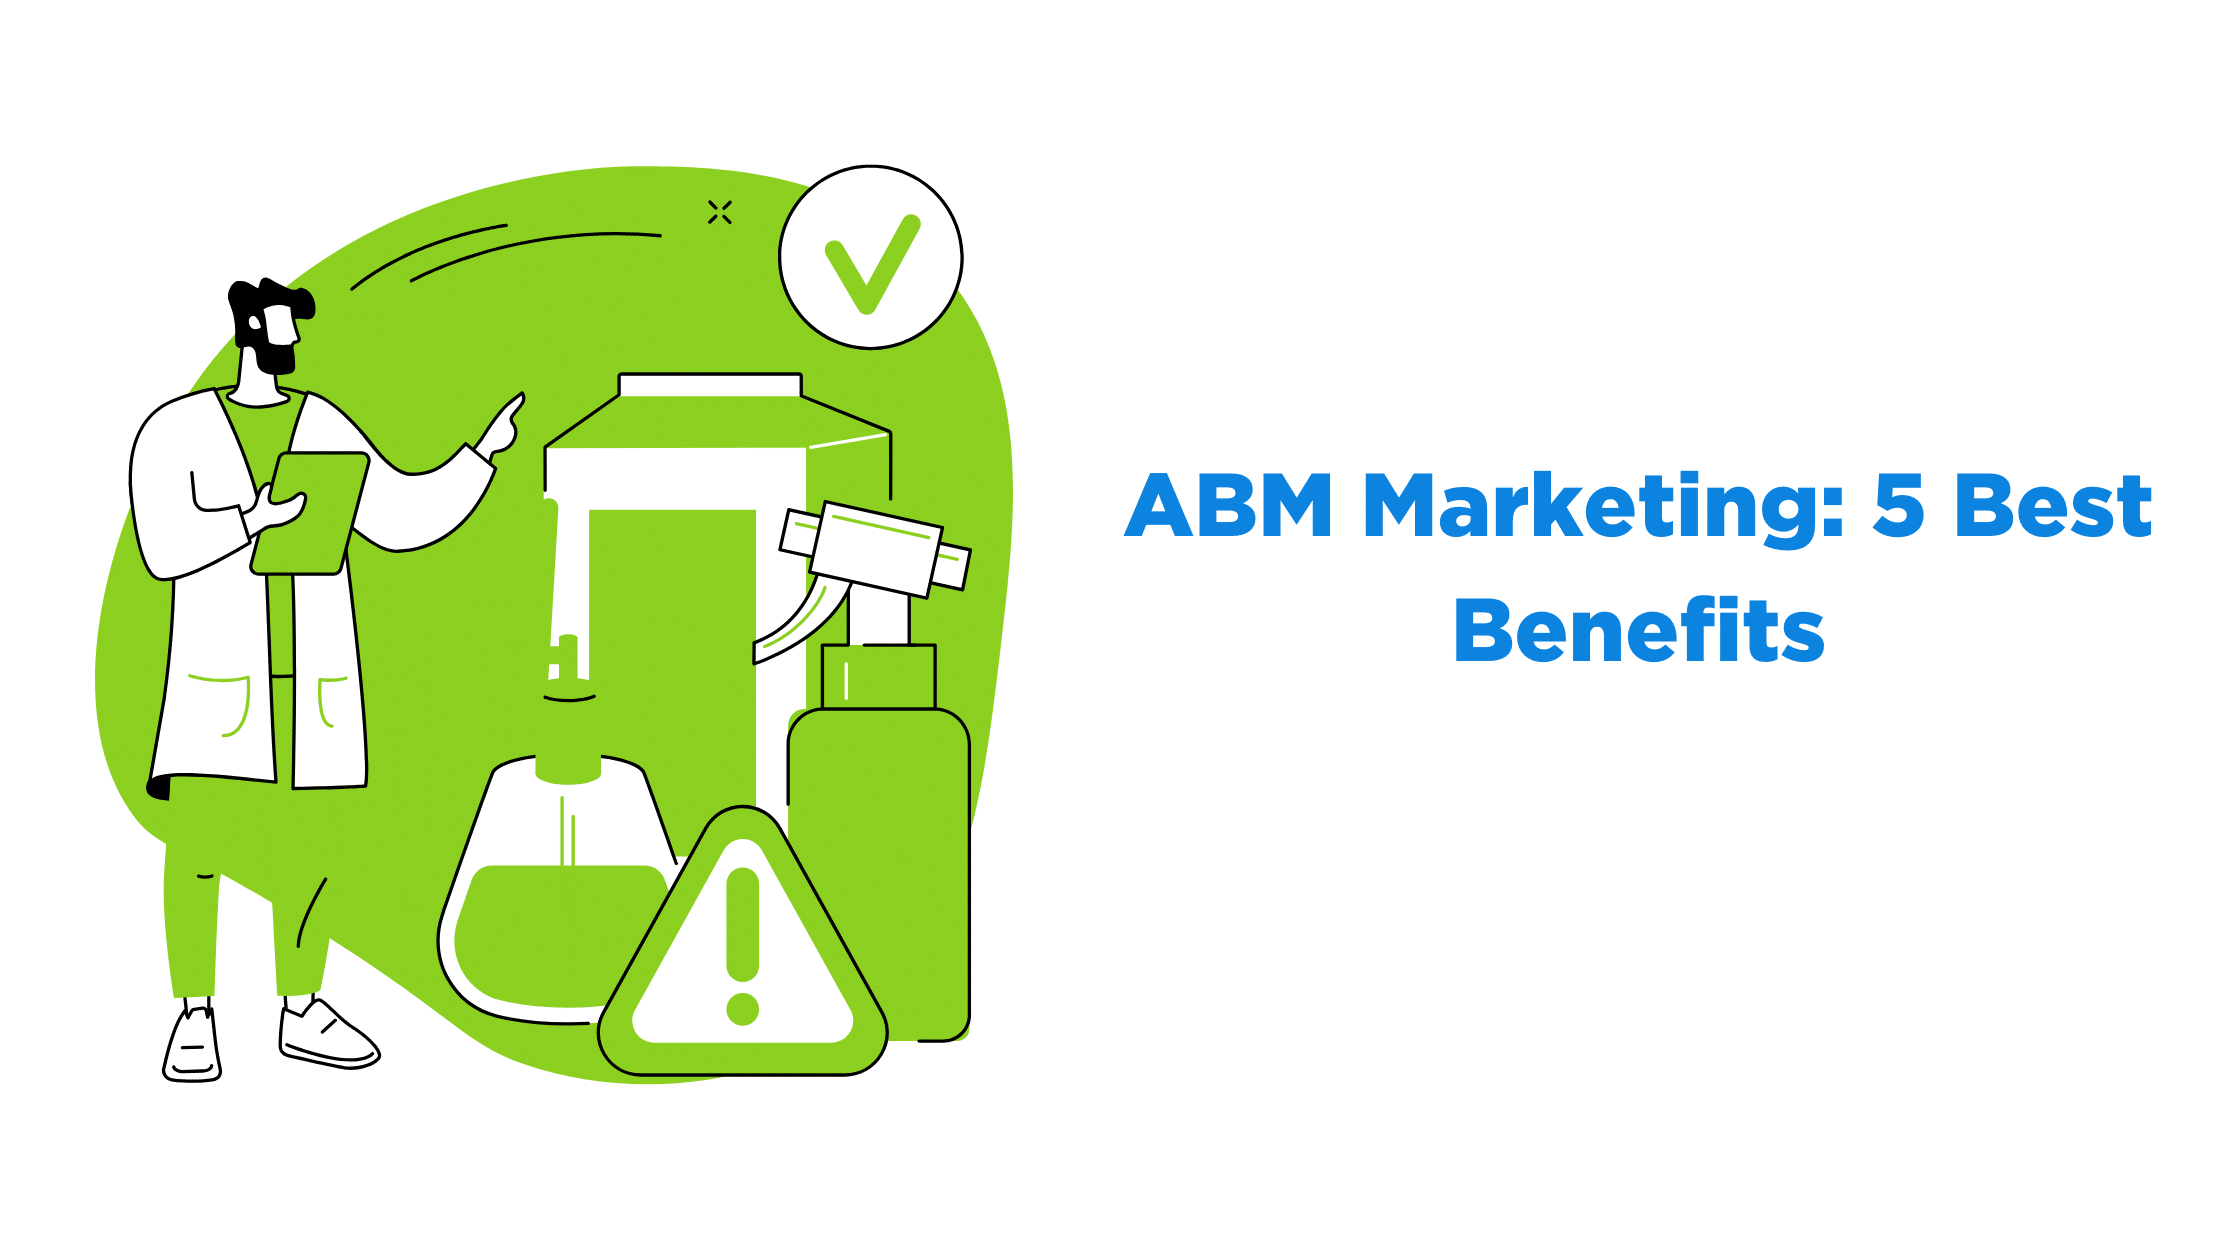 ABM Marketing: 5 Best Benefits